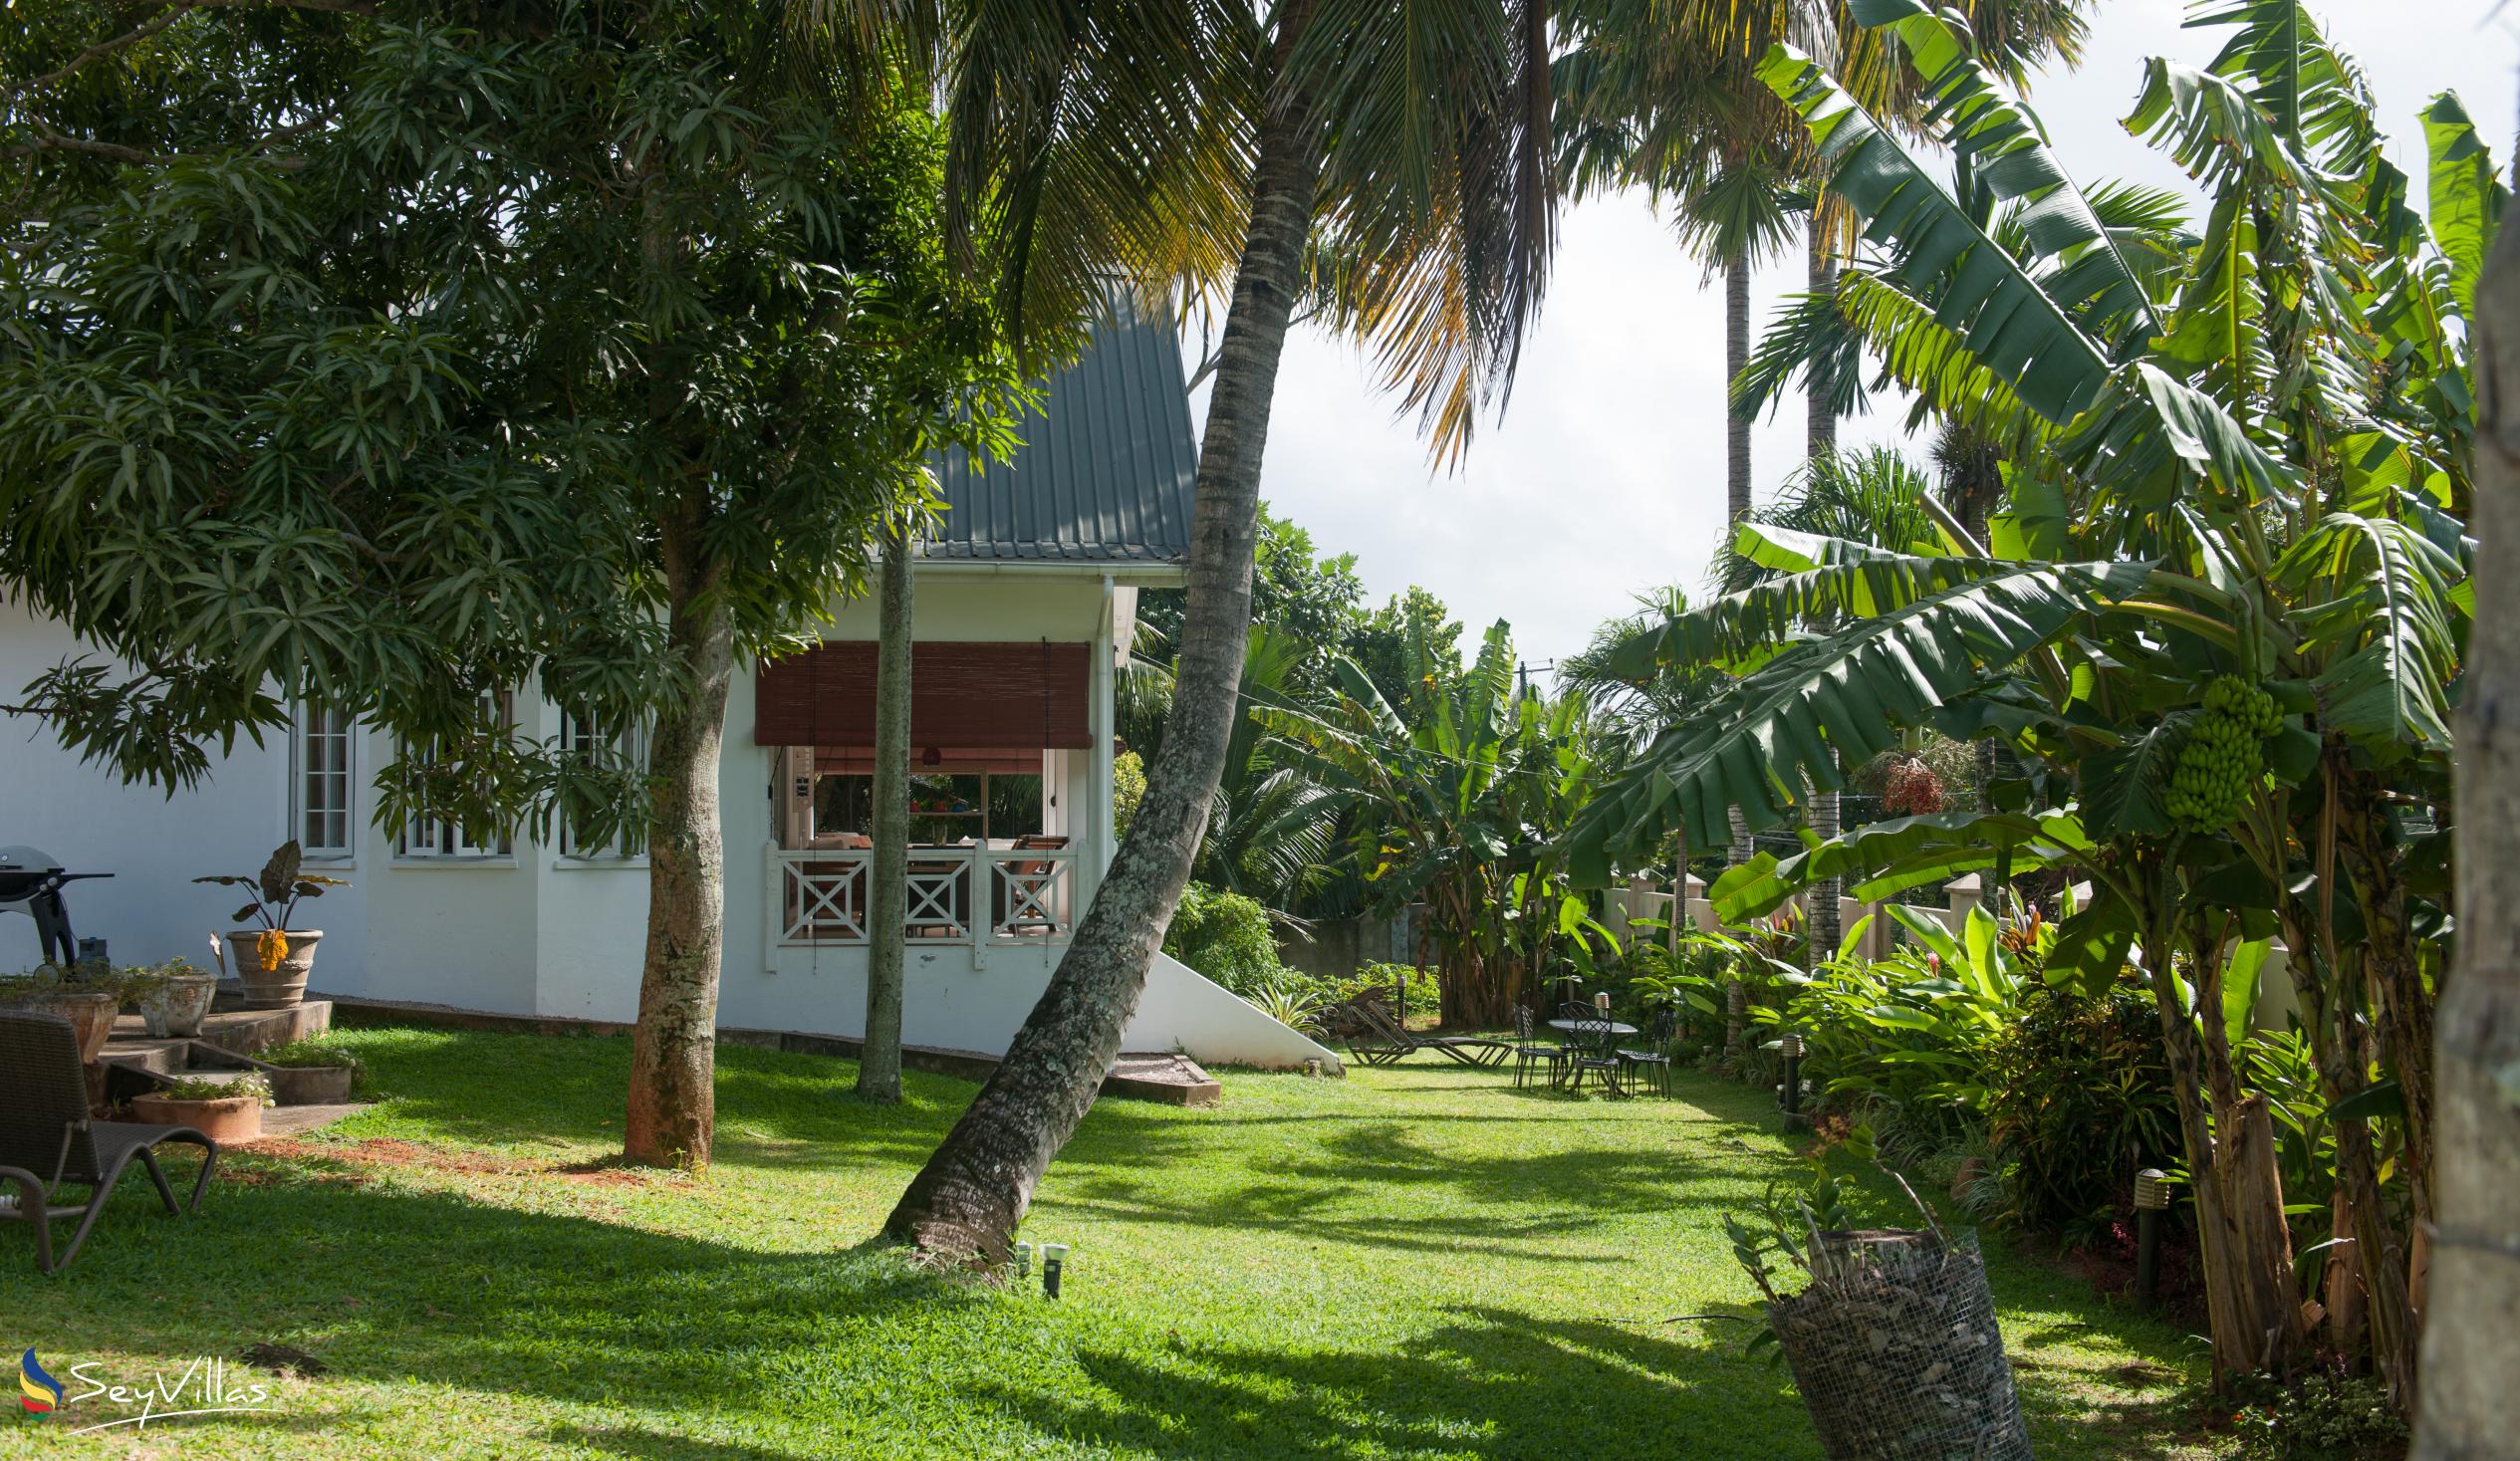 Photo 6: Le Domaine de Bacova - Outdoor area - Mahé (Seychelles)